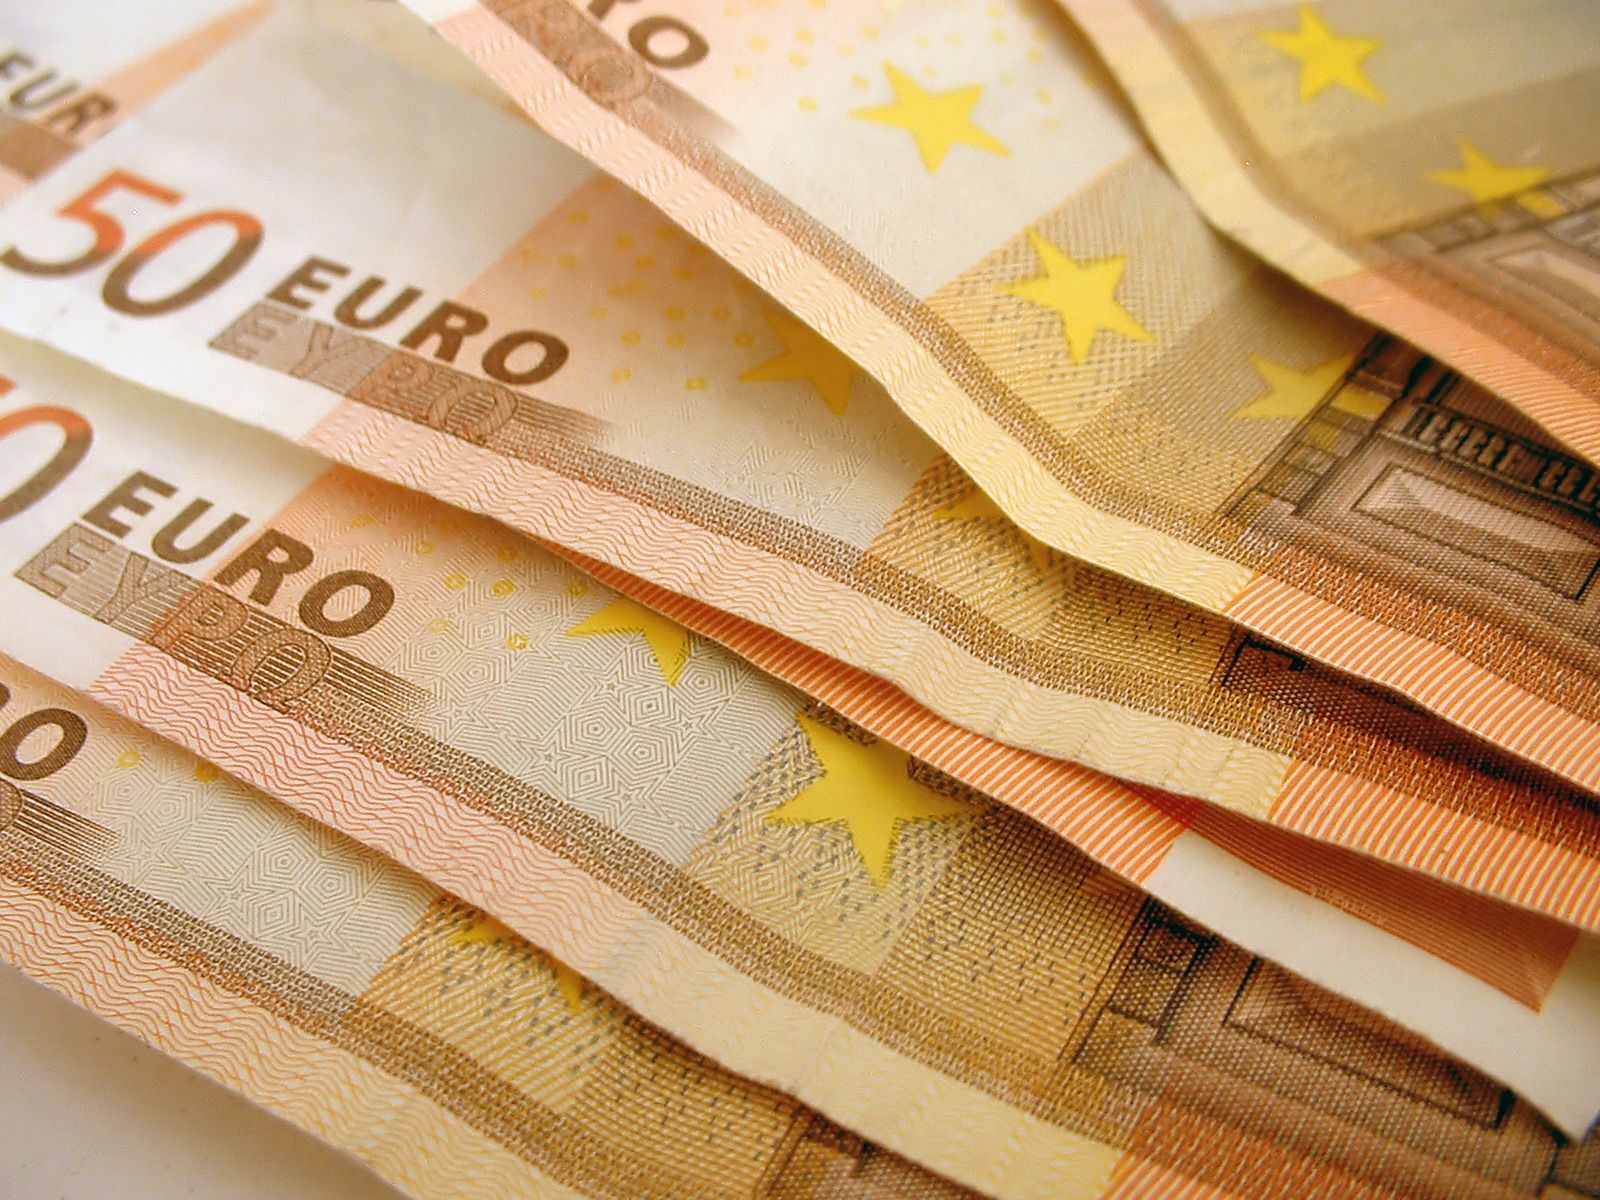 Dengi. Деньги евро. Деньги евро картинки. Обои деньги. Обои деньги евро.